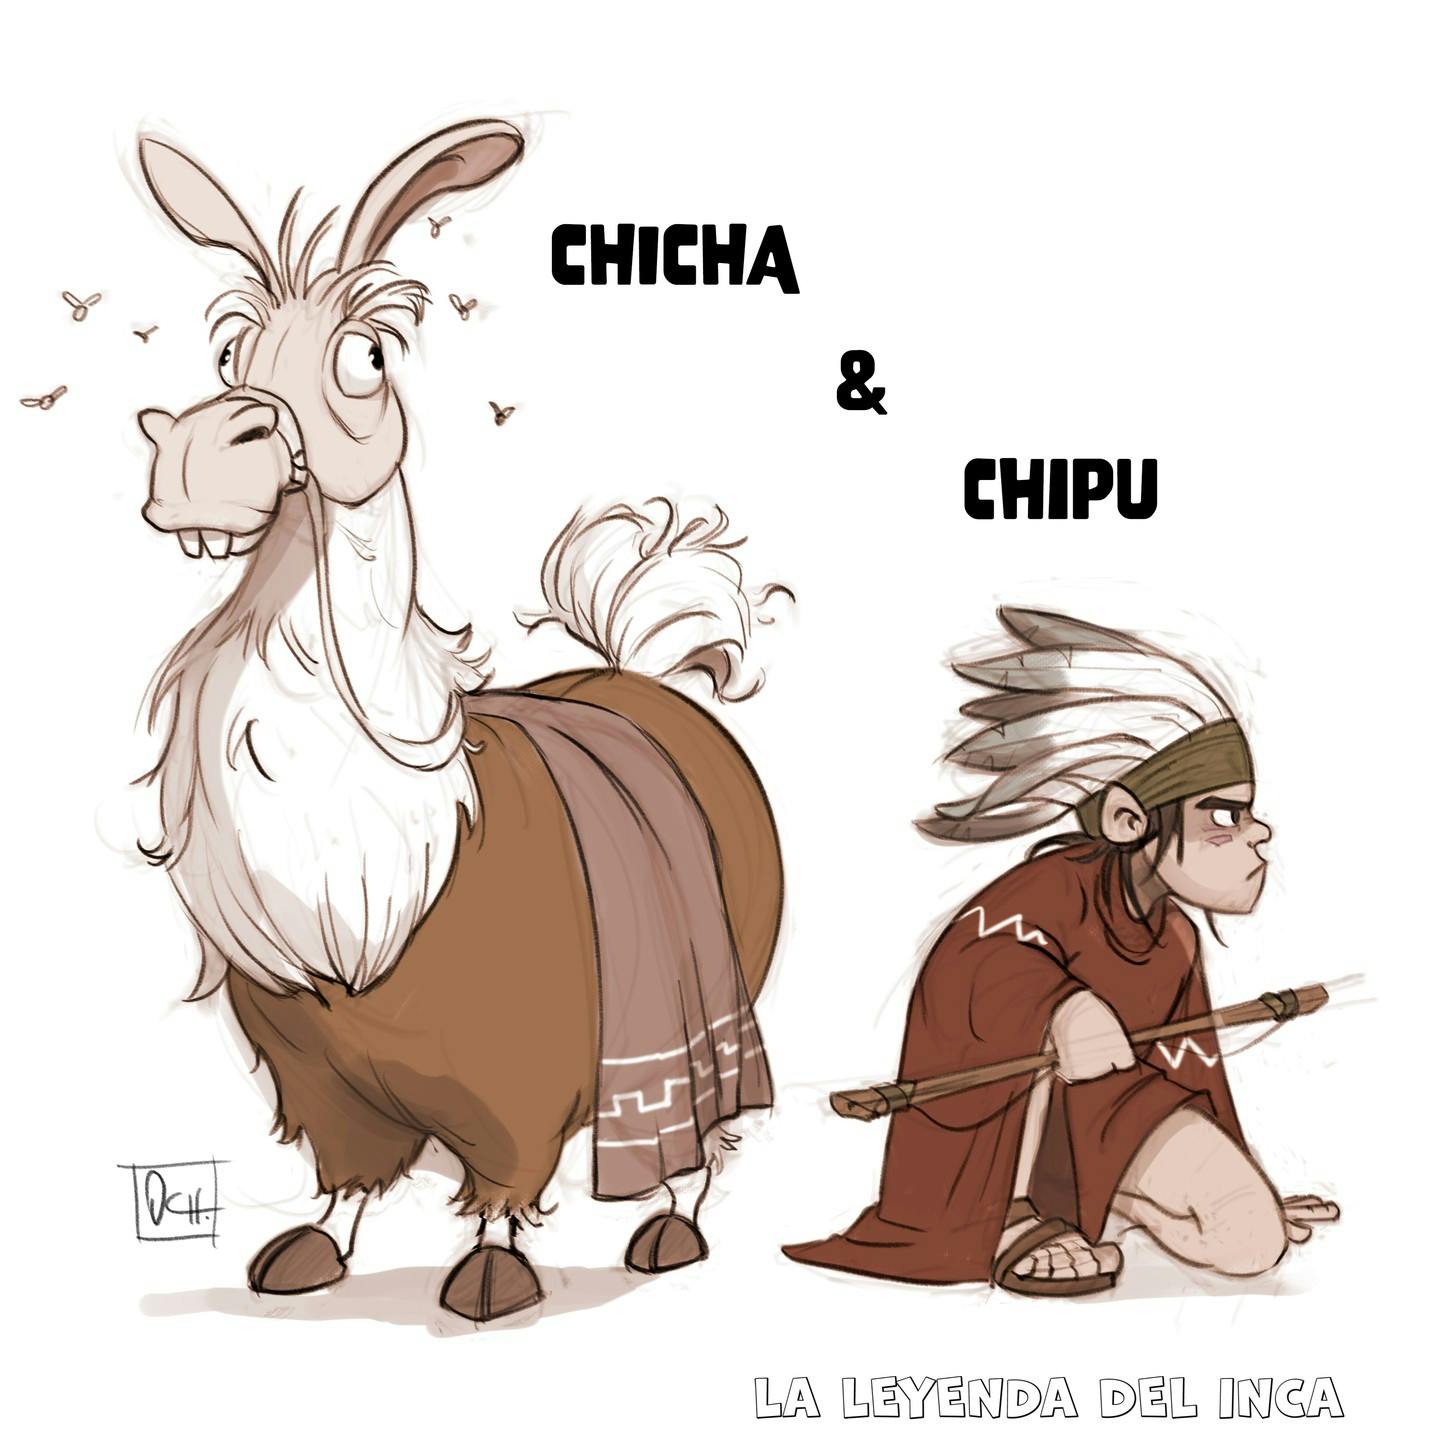 Illustration of Chicha & Chipu